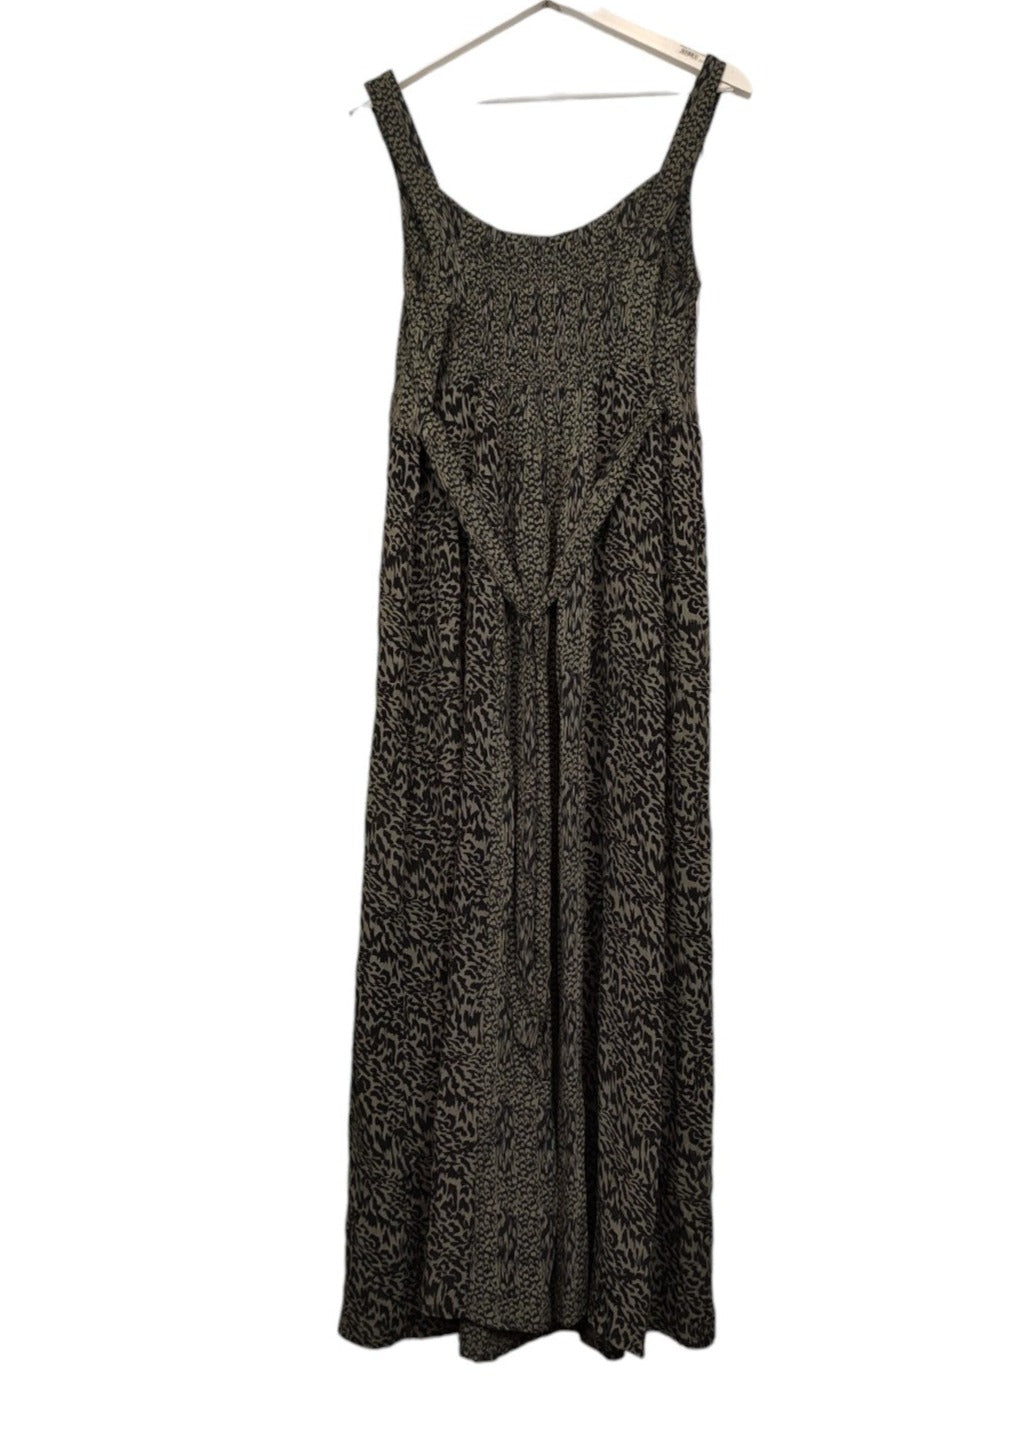 Animal Print, Maxi Φόρεμα από Βισκόζη AUTHENTIC σε Χακί-Μαύρο χρώμα (Large)